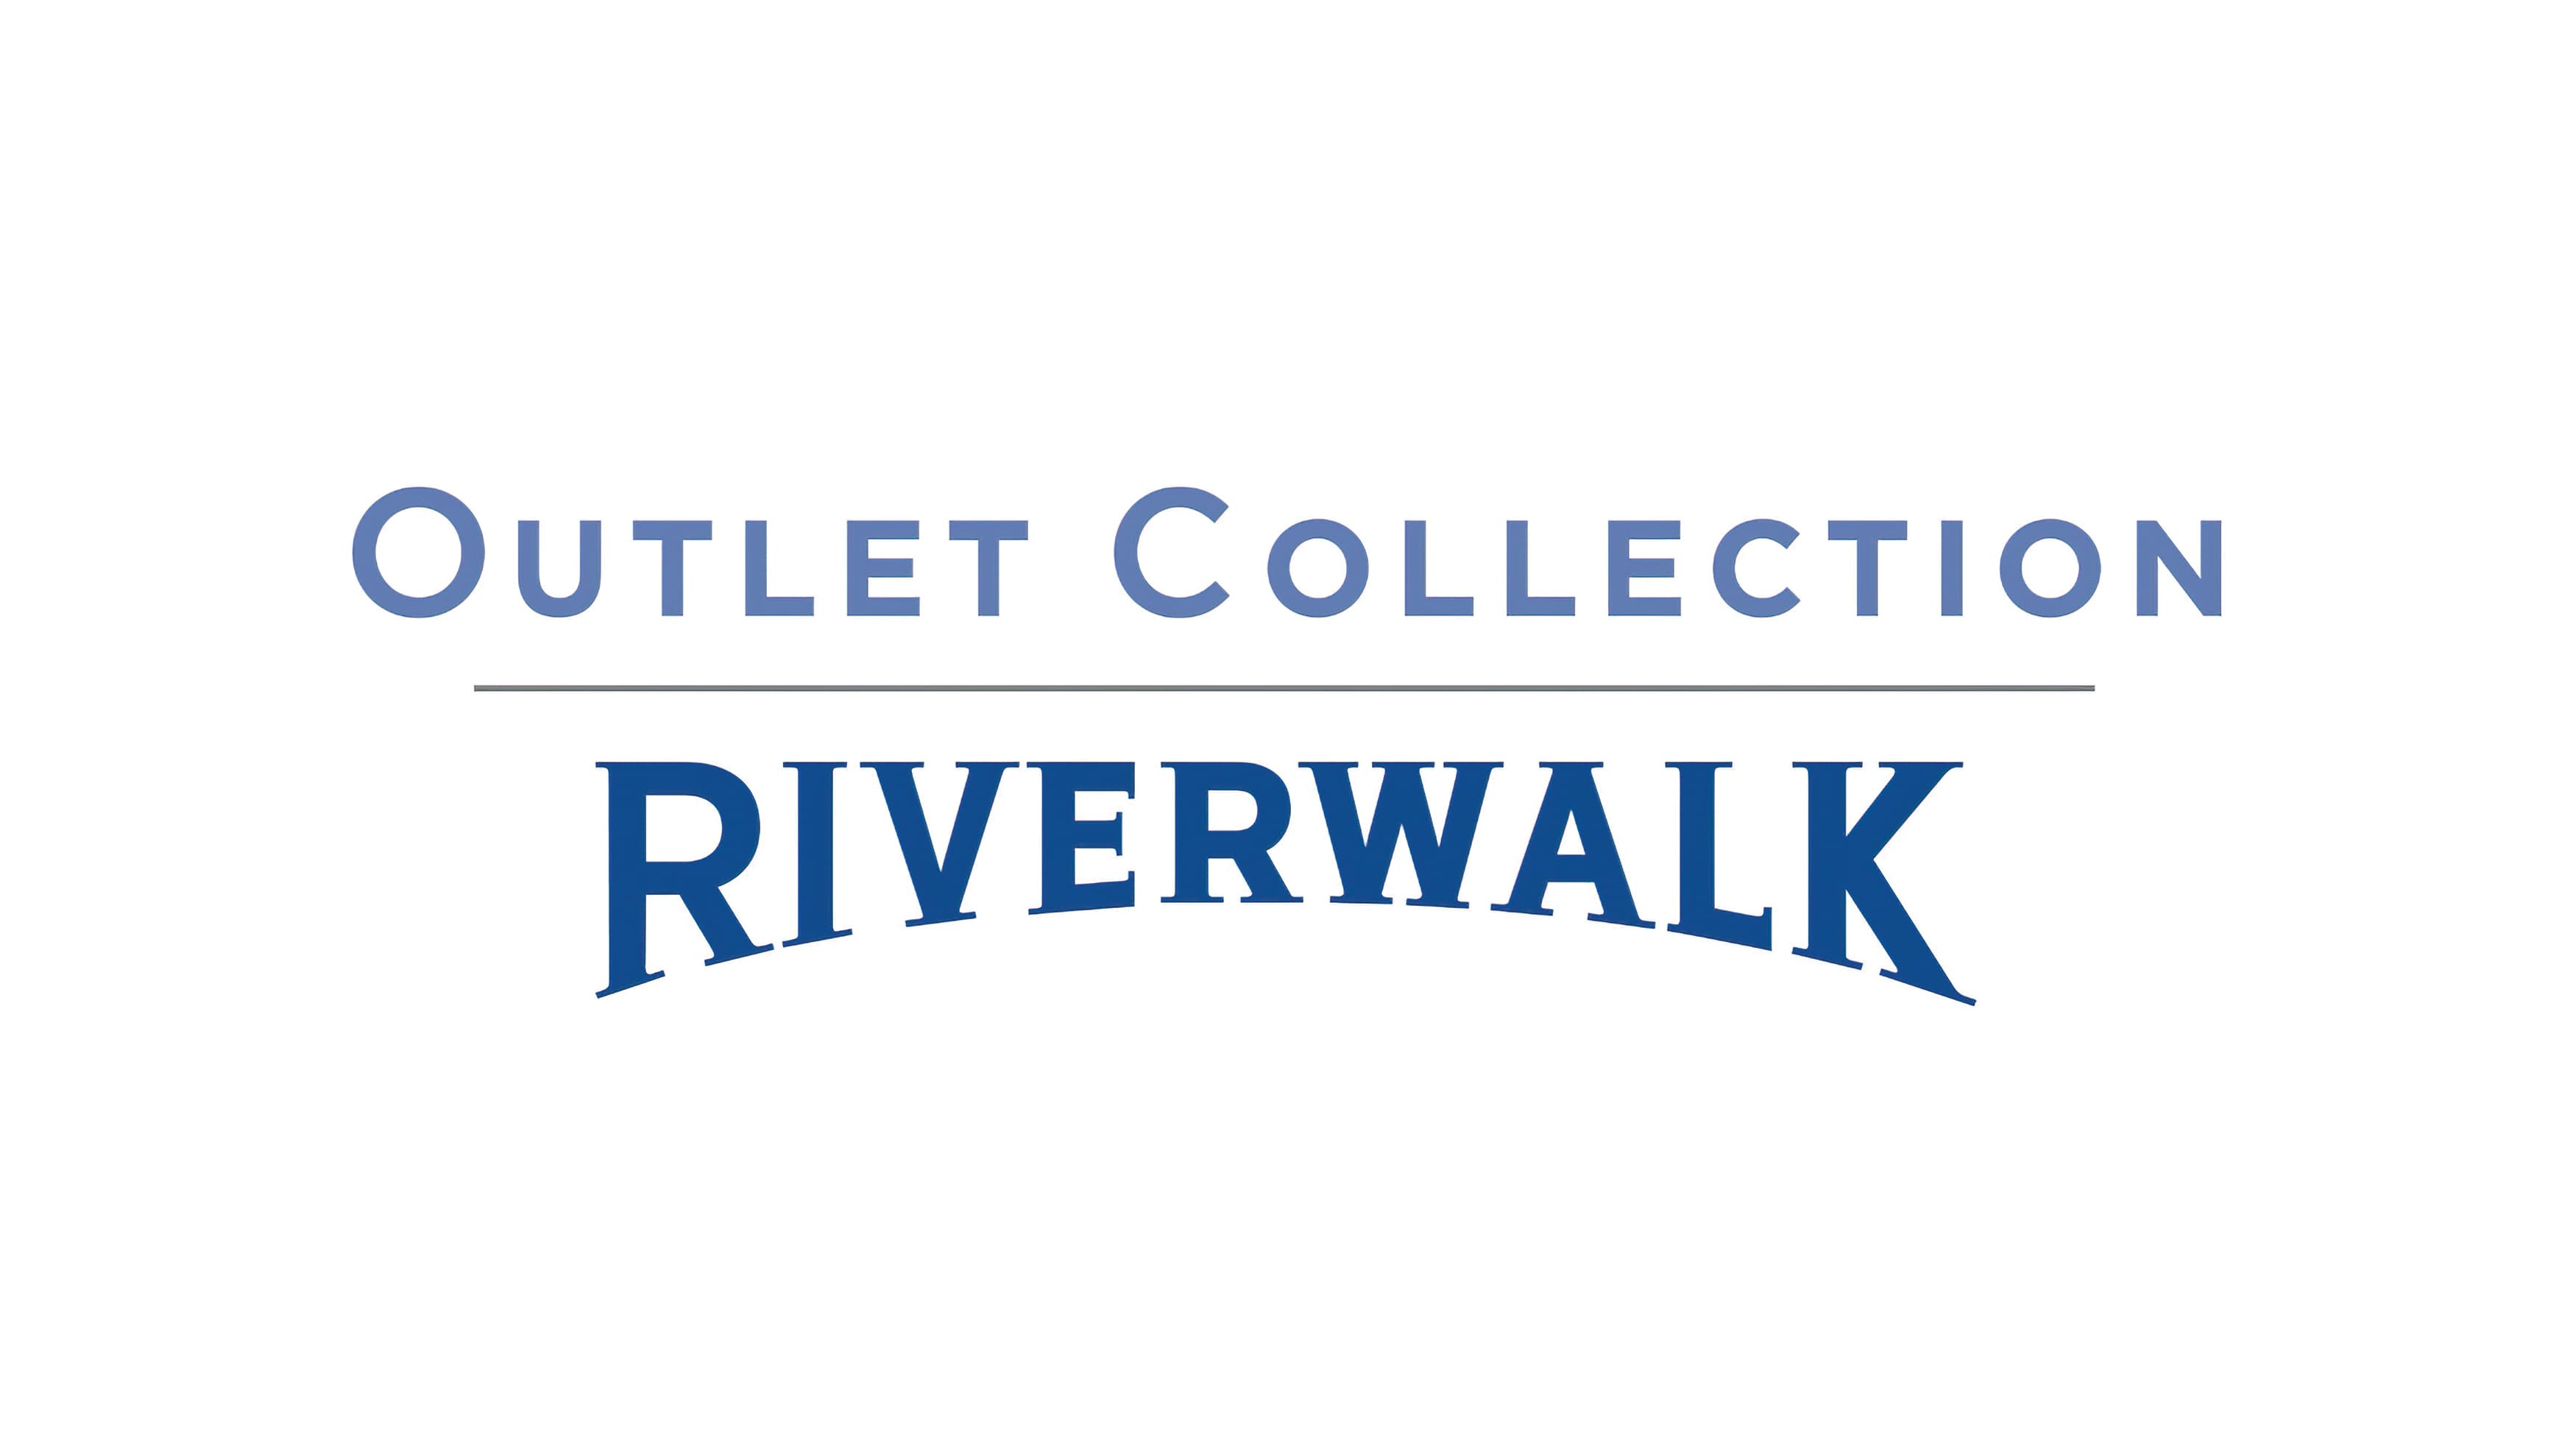 The Outlet Collection at Riverwalk logo designed by RSM design